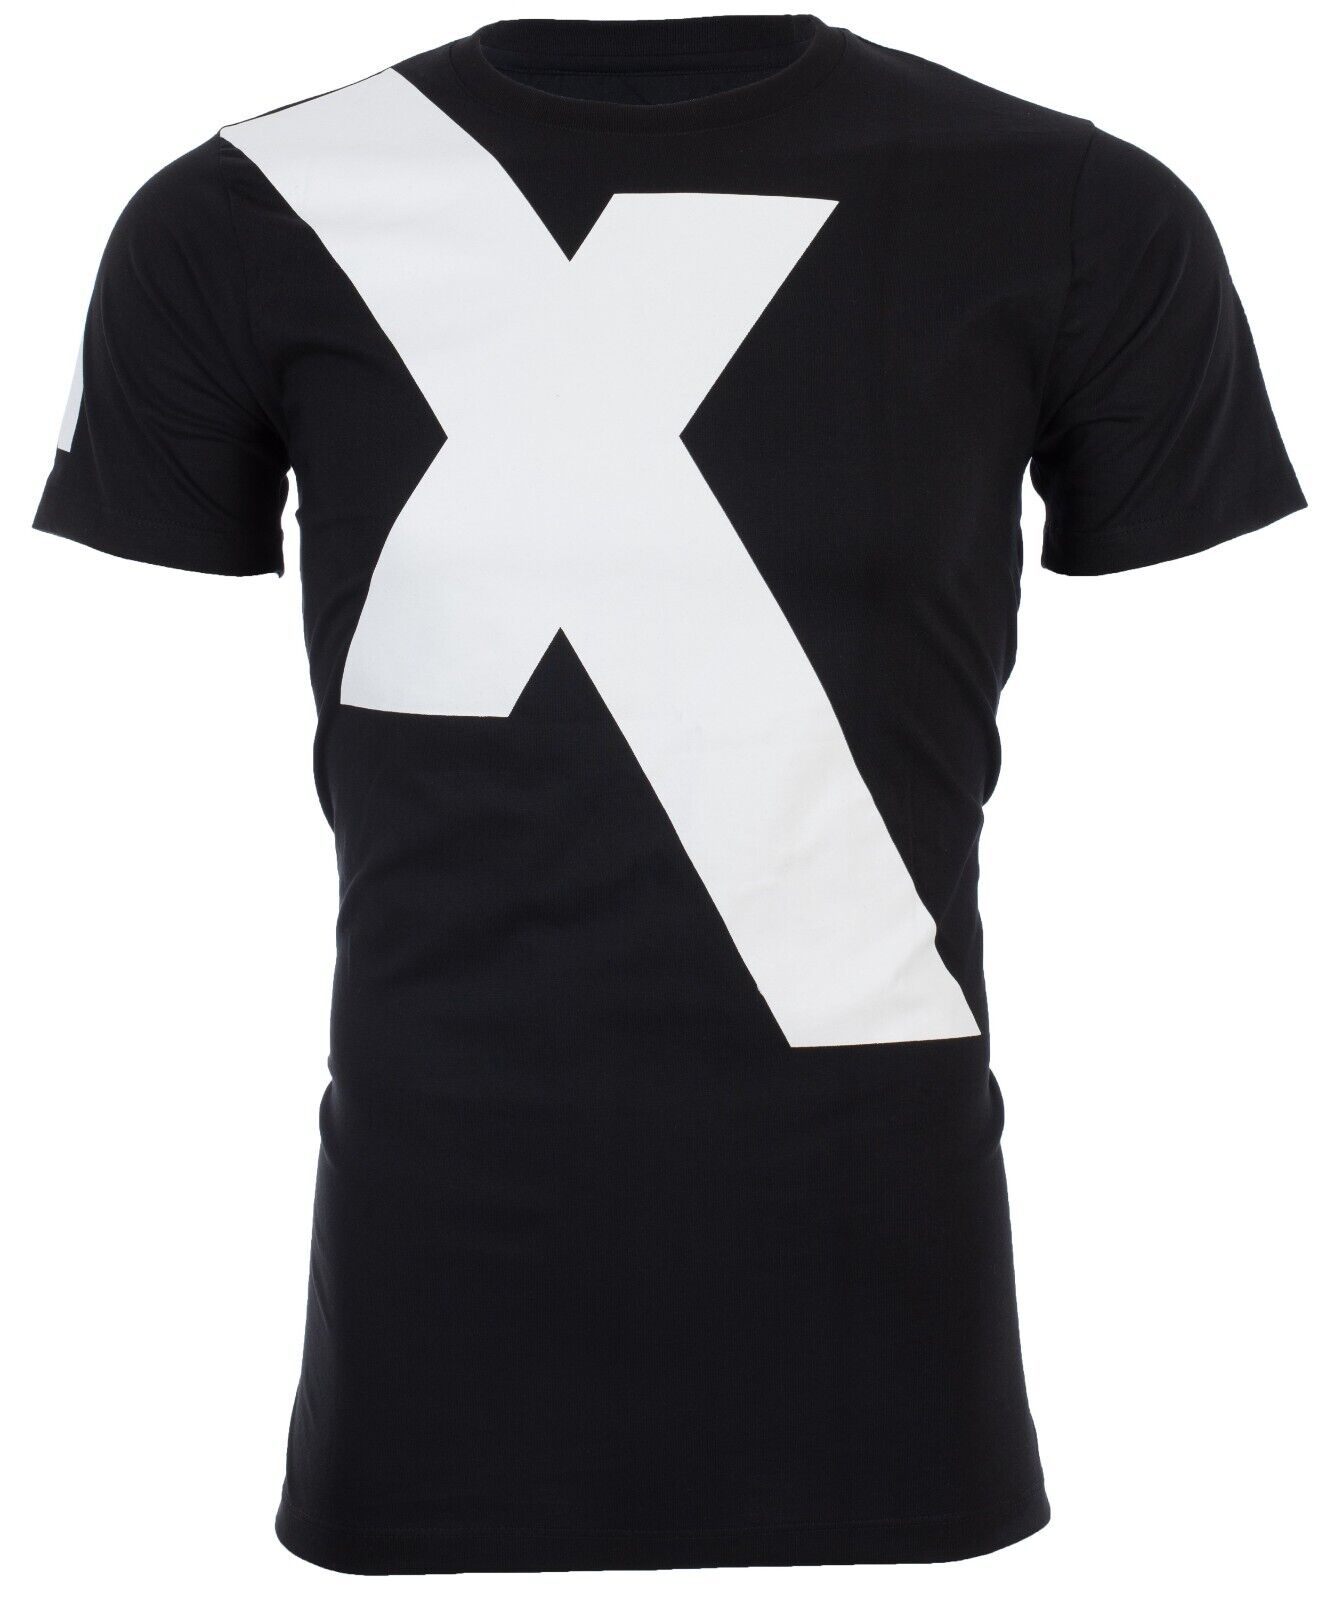 ARMANI EXCHANGE Black X LOGO Short Sleeve Slim Fit Designer Graphic T-shirt NWT